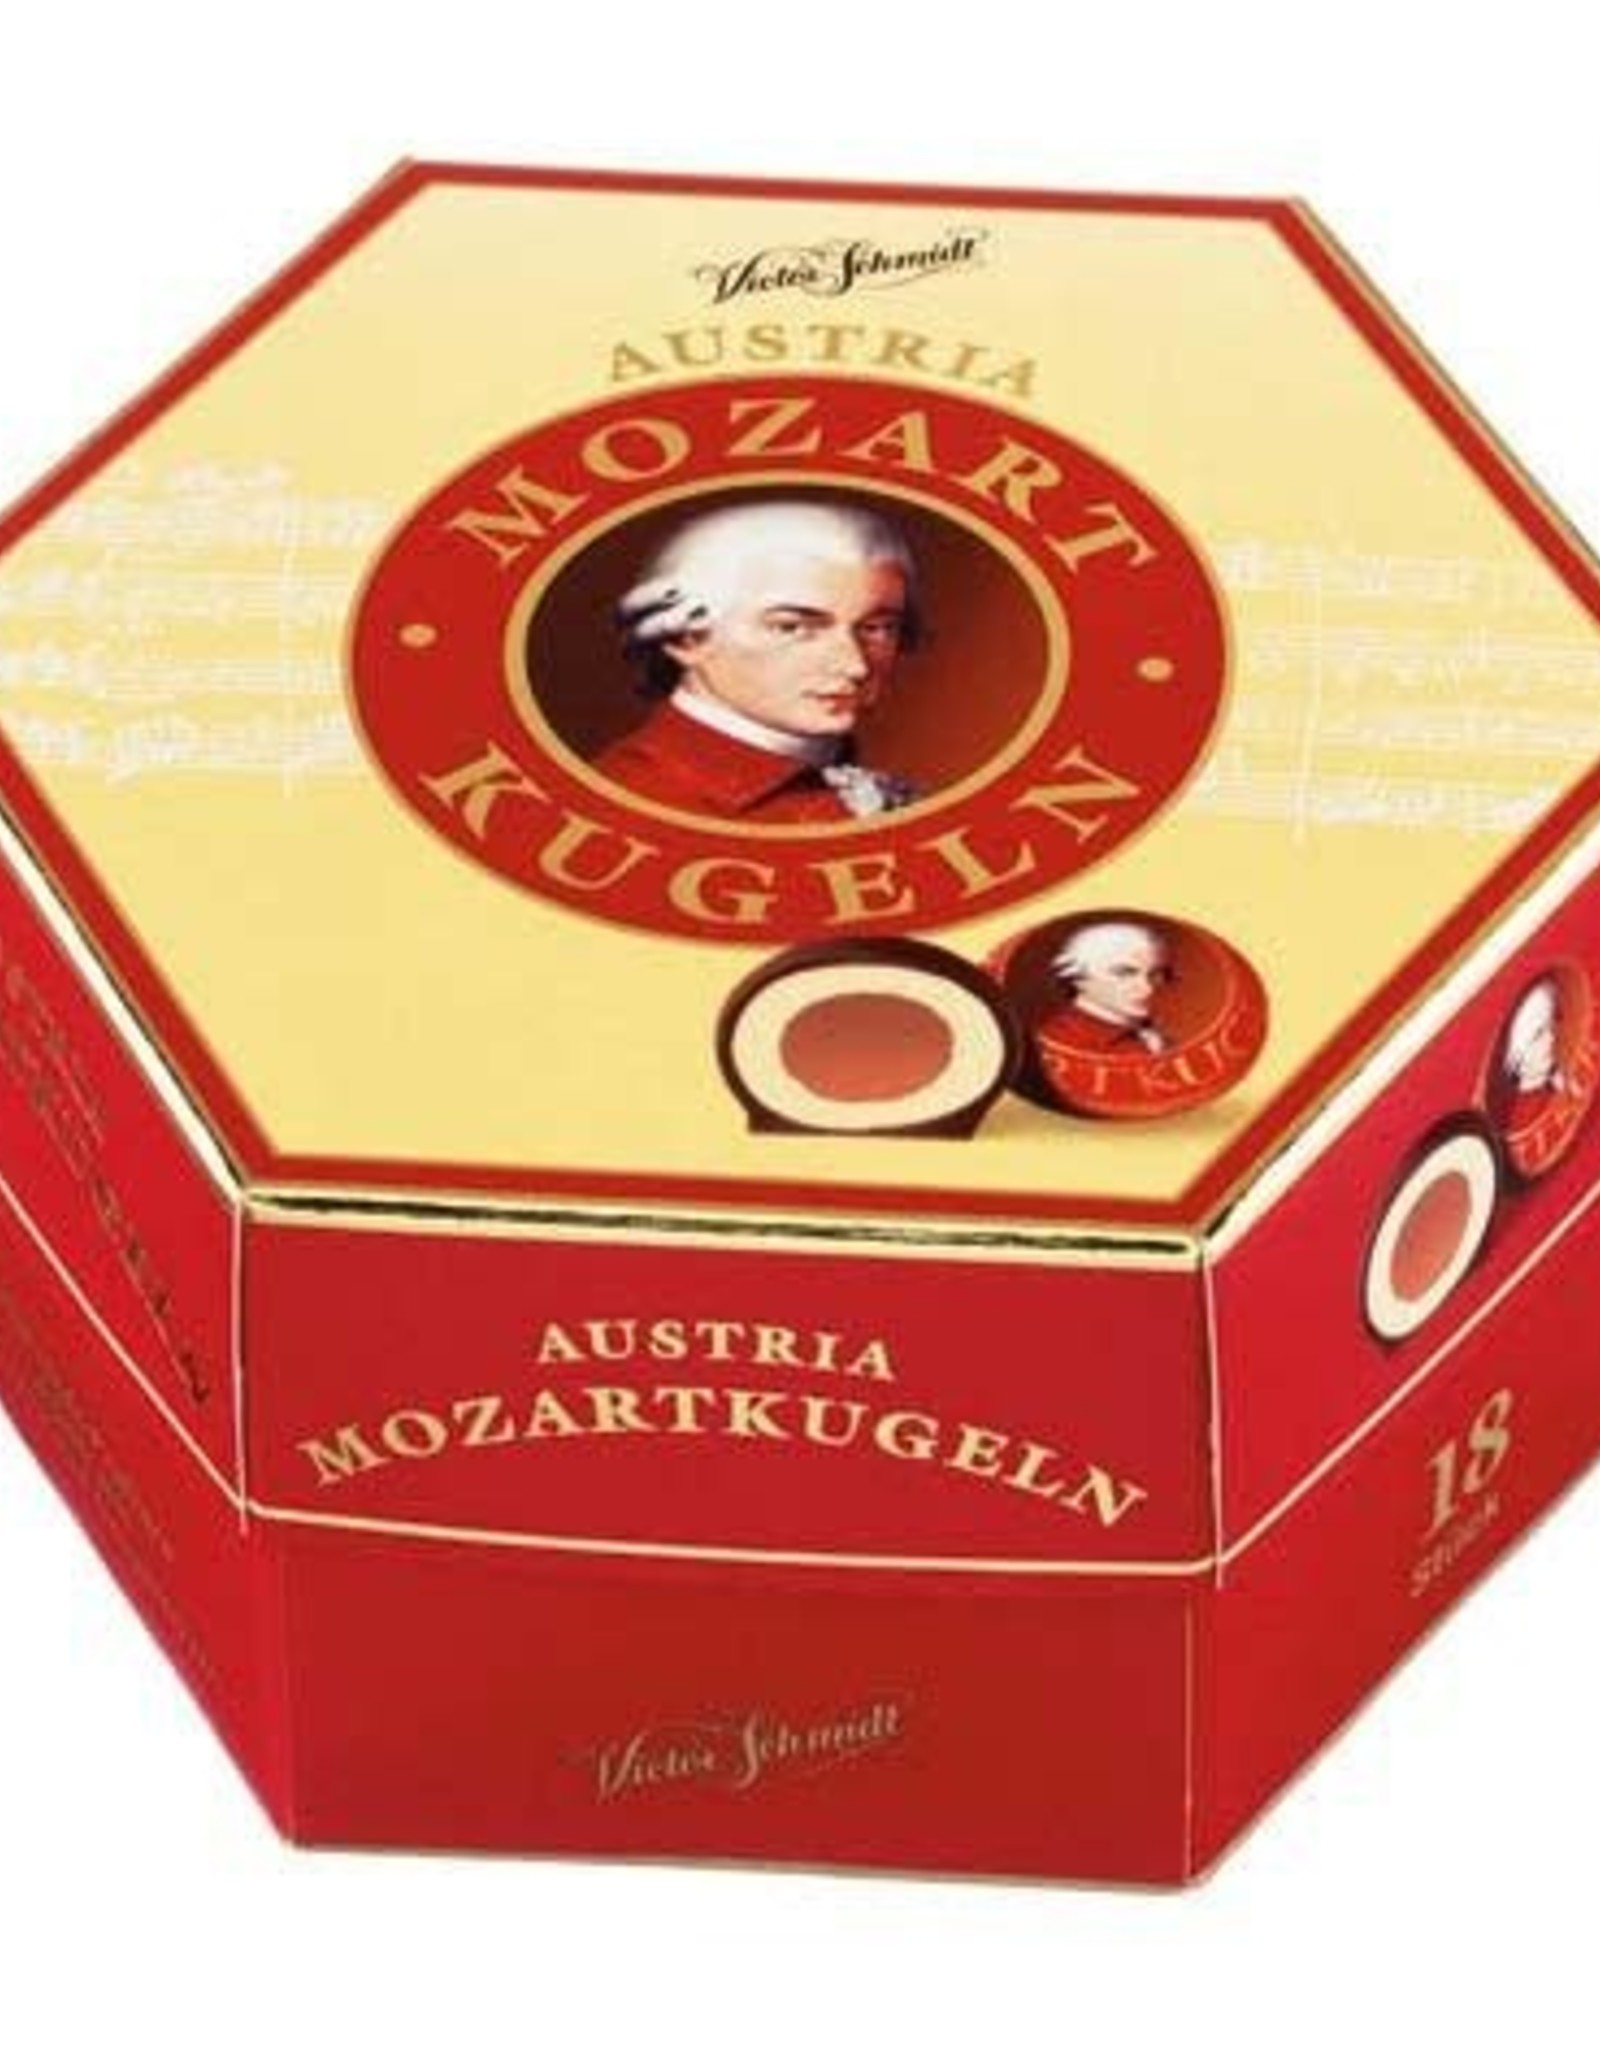 Norget & Co Holiday Treats - Mozartkugeln Gift Box